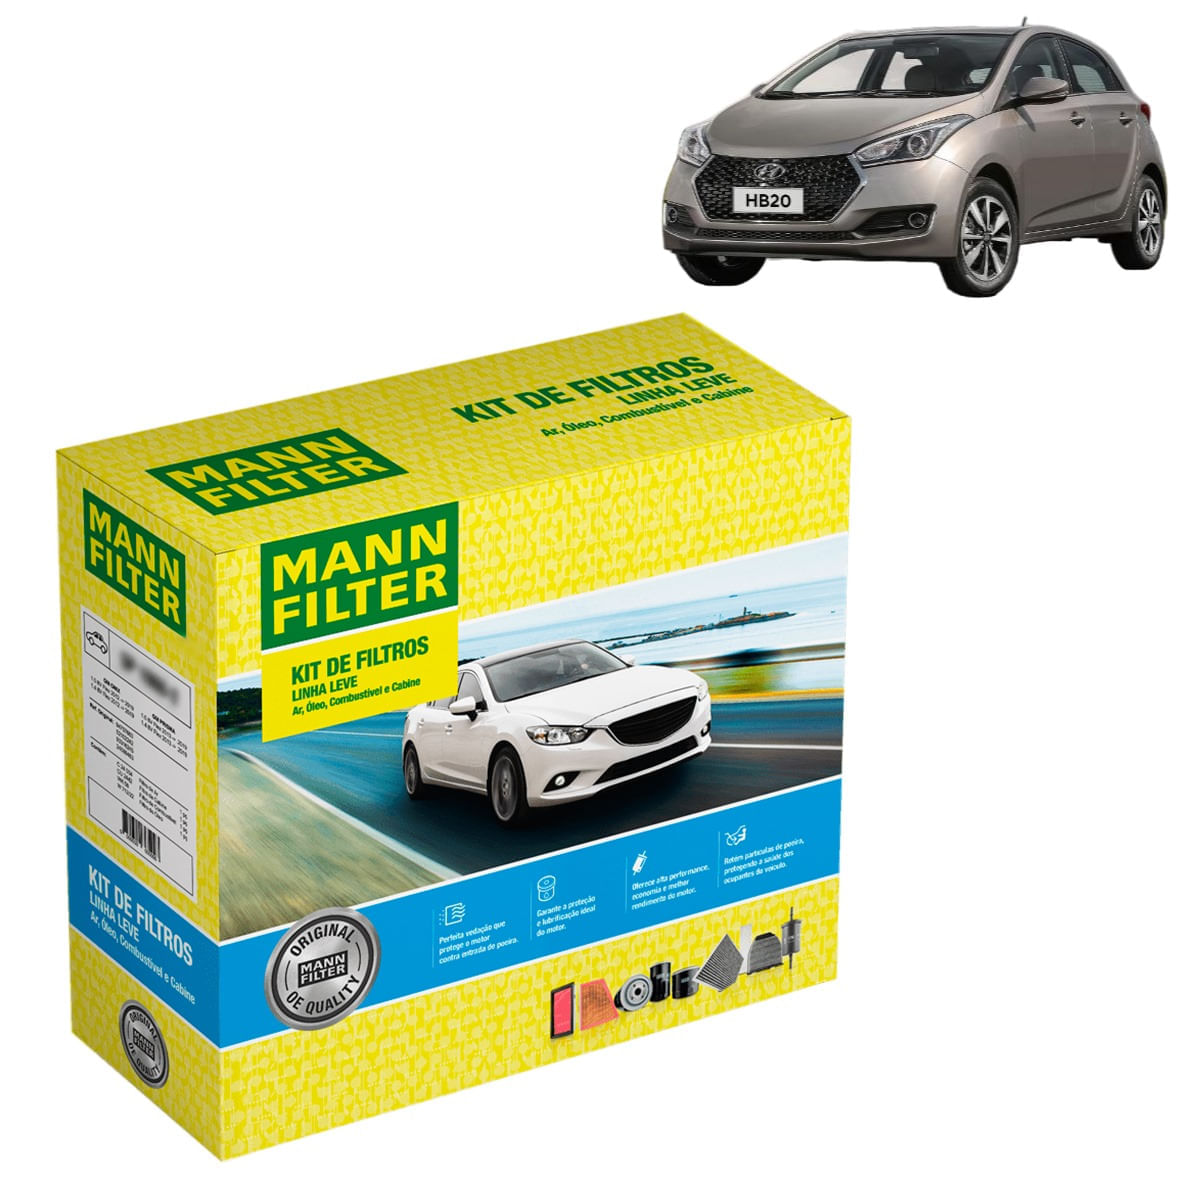 Kit de Filtros Mann Filter Hyundai HB20 1.6 16V Flex 2012 até 2019